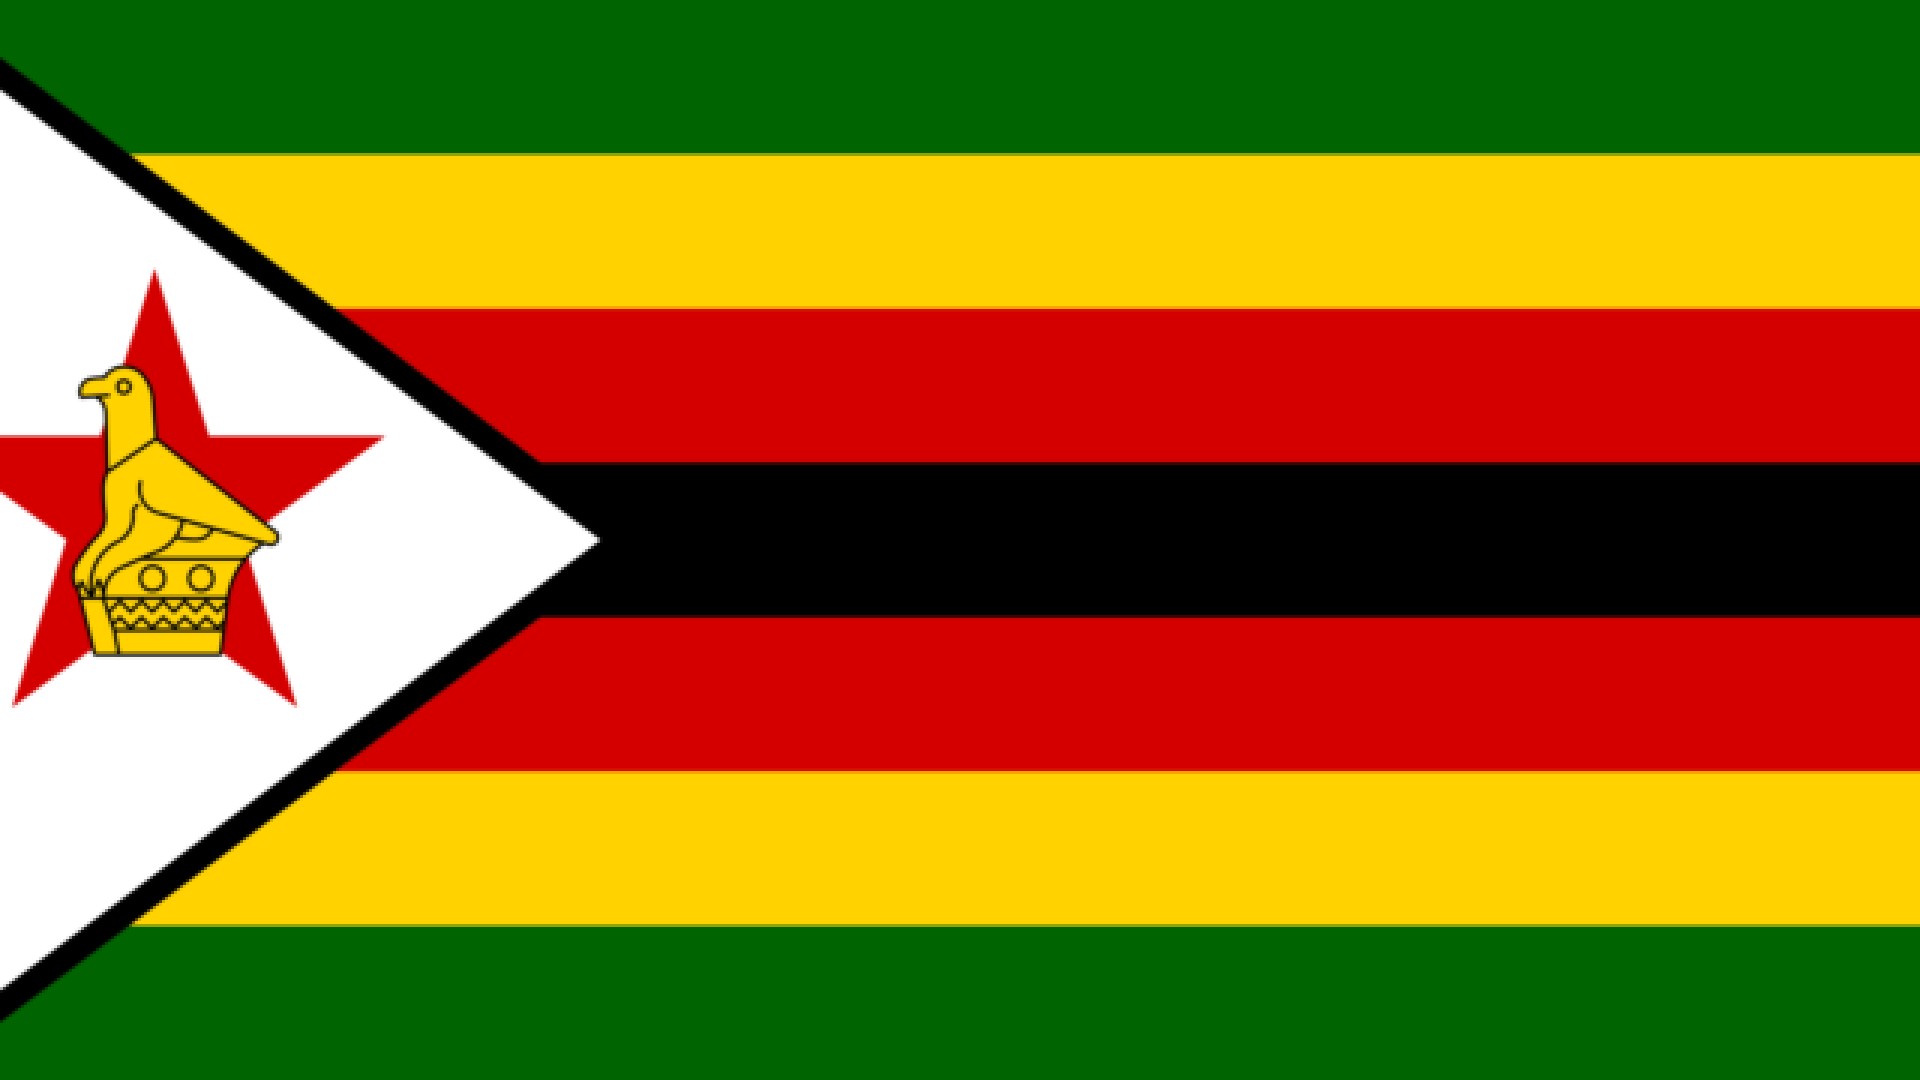 An image of the flag of Zimbabwe